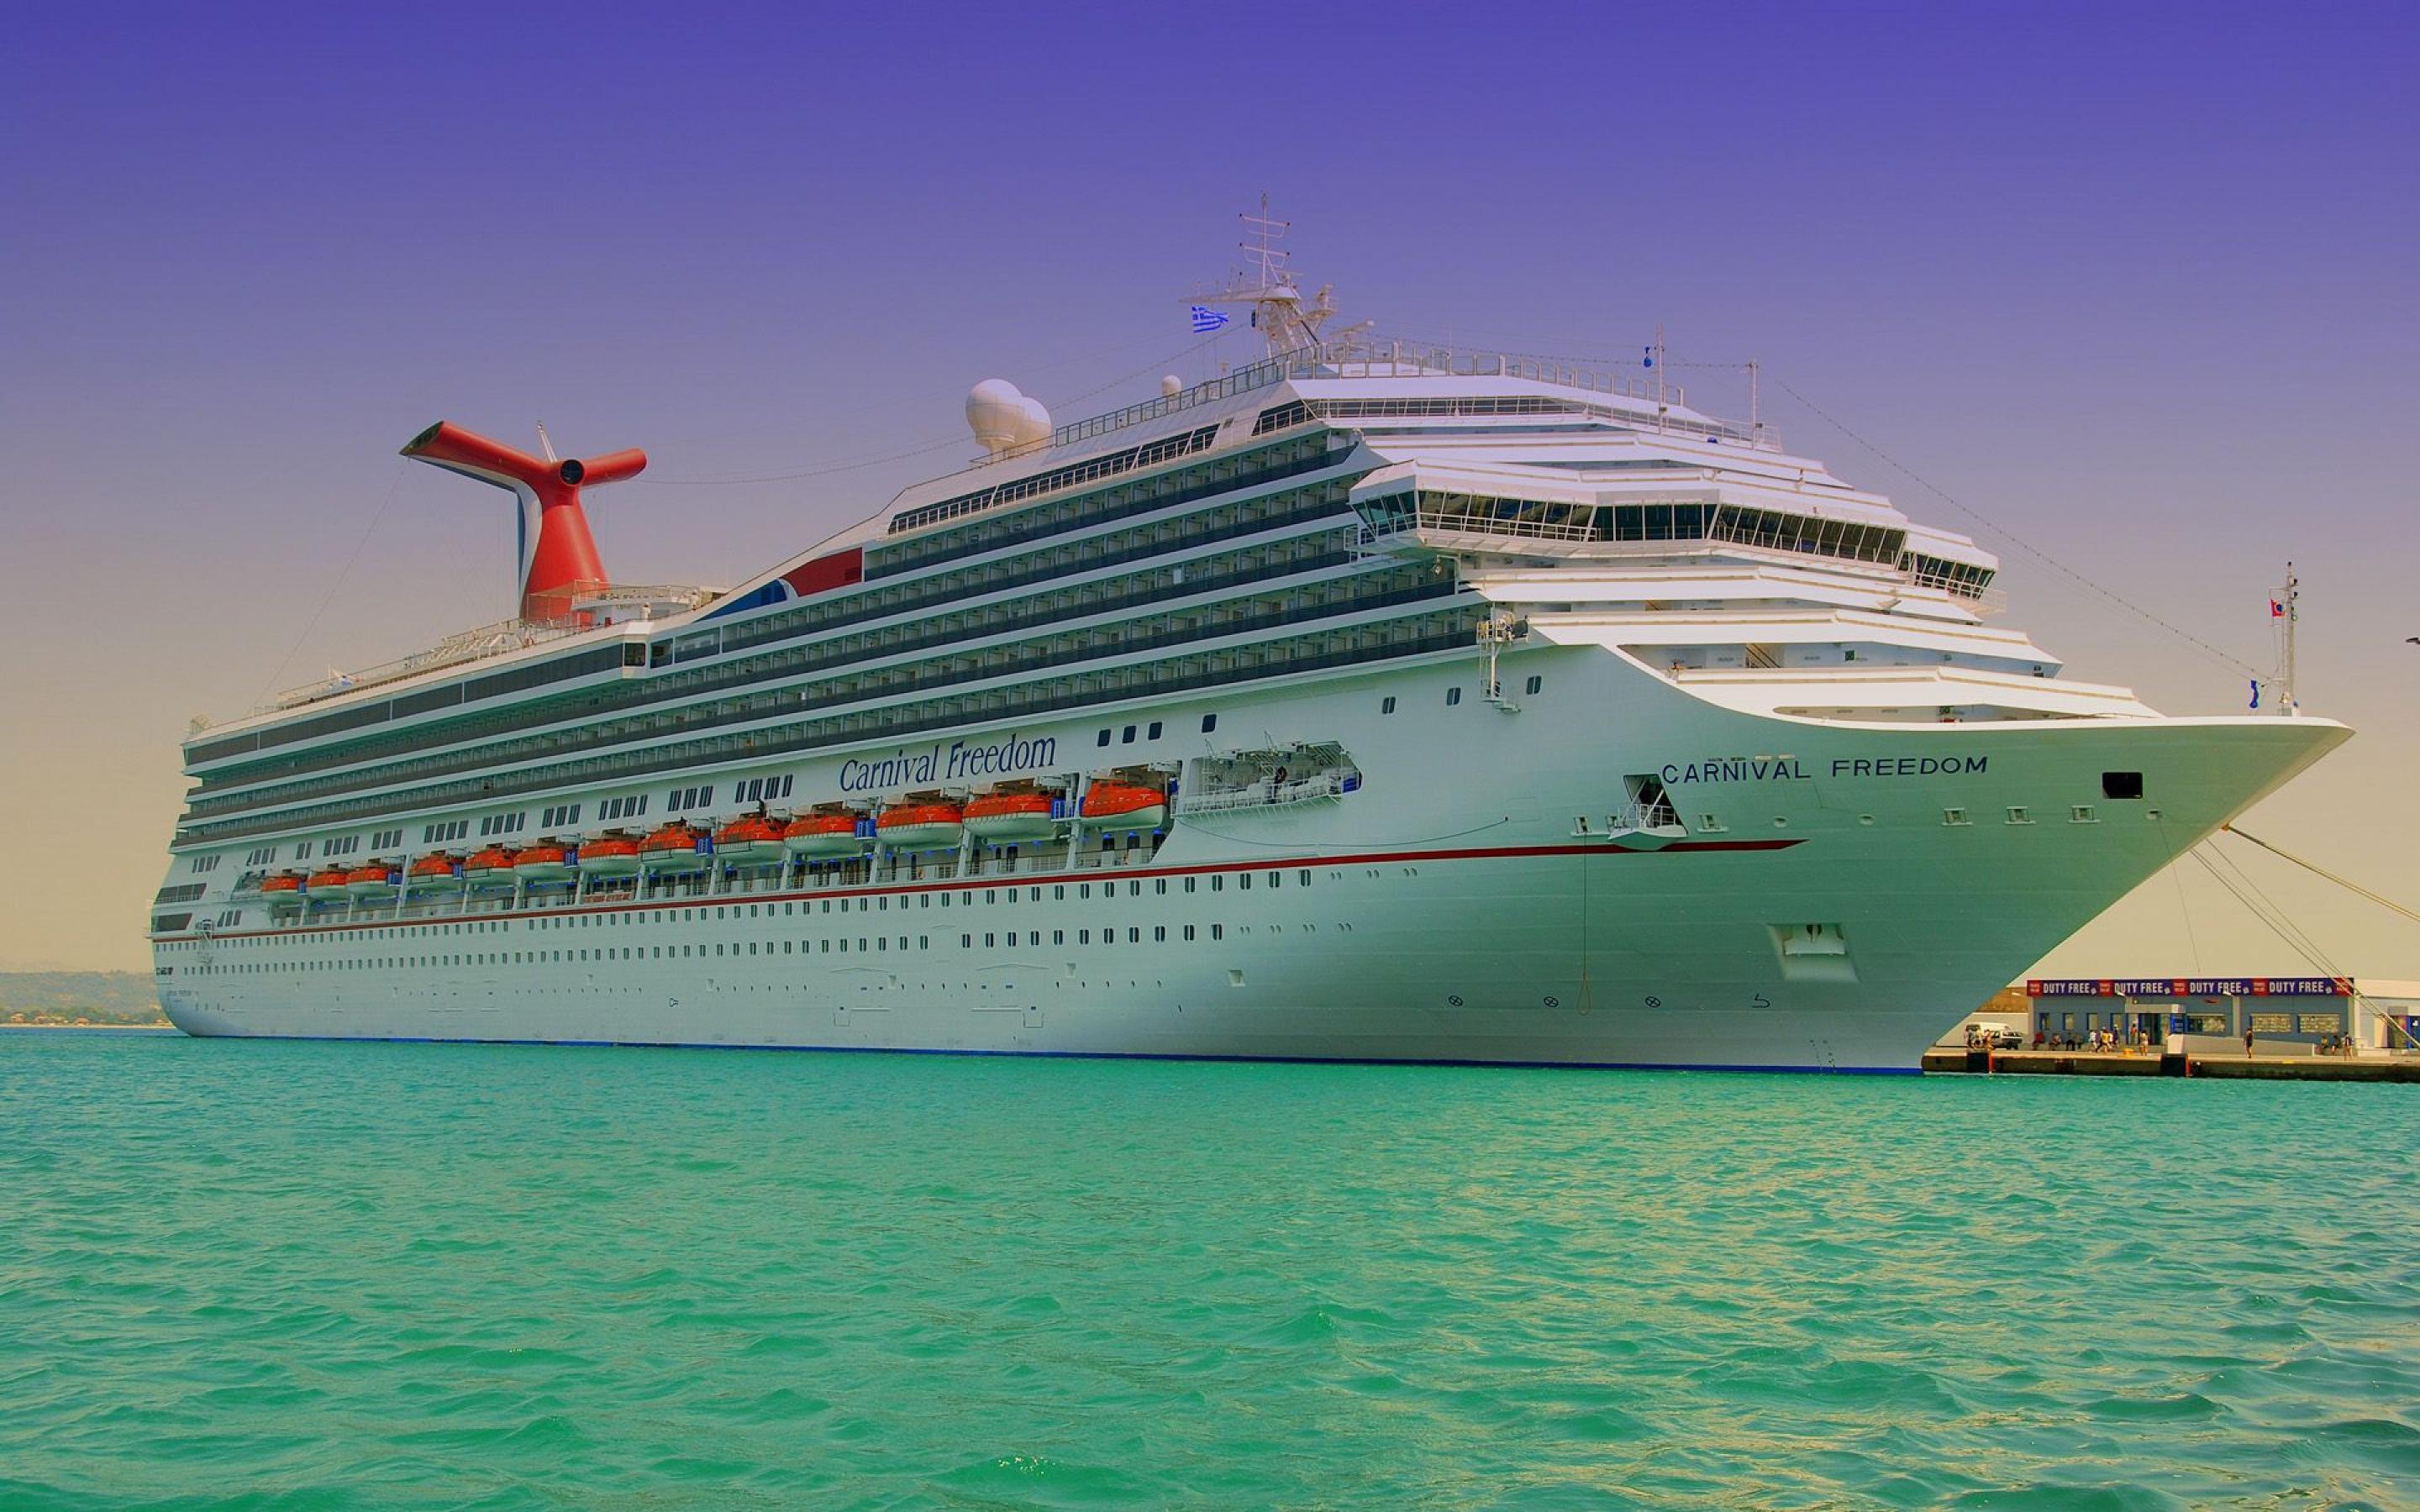 cruise ship photos free download